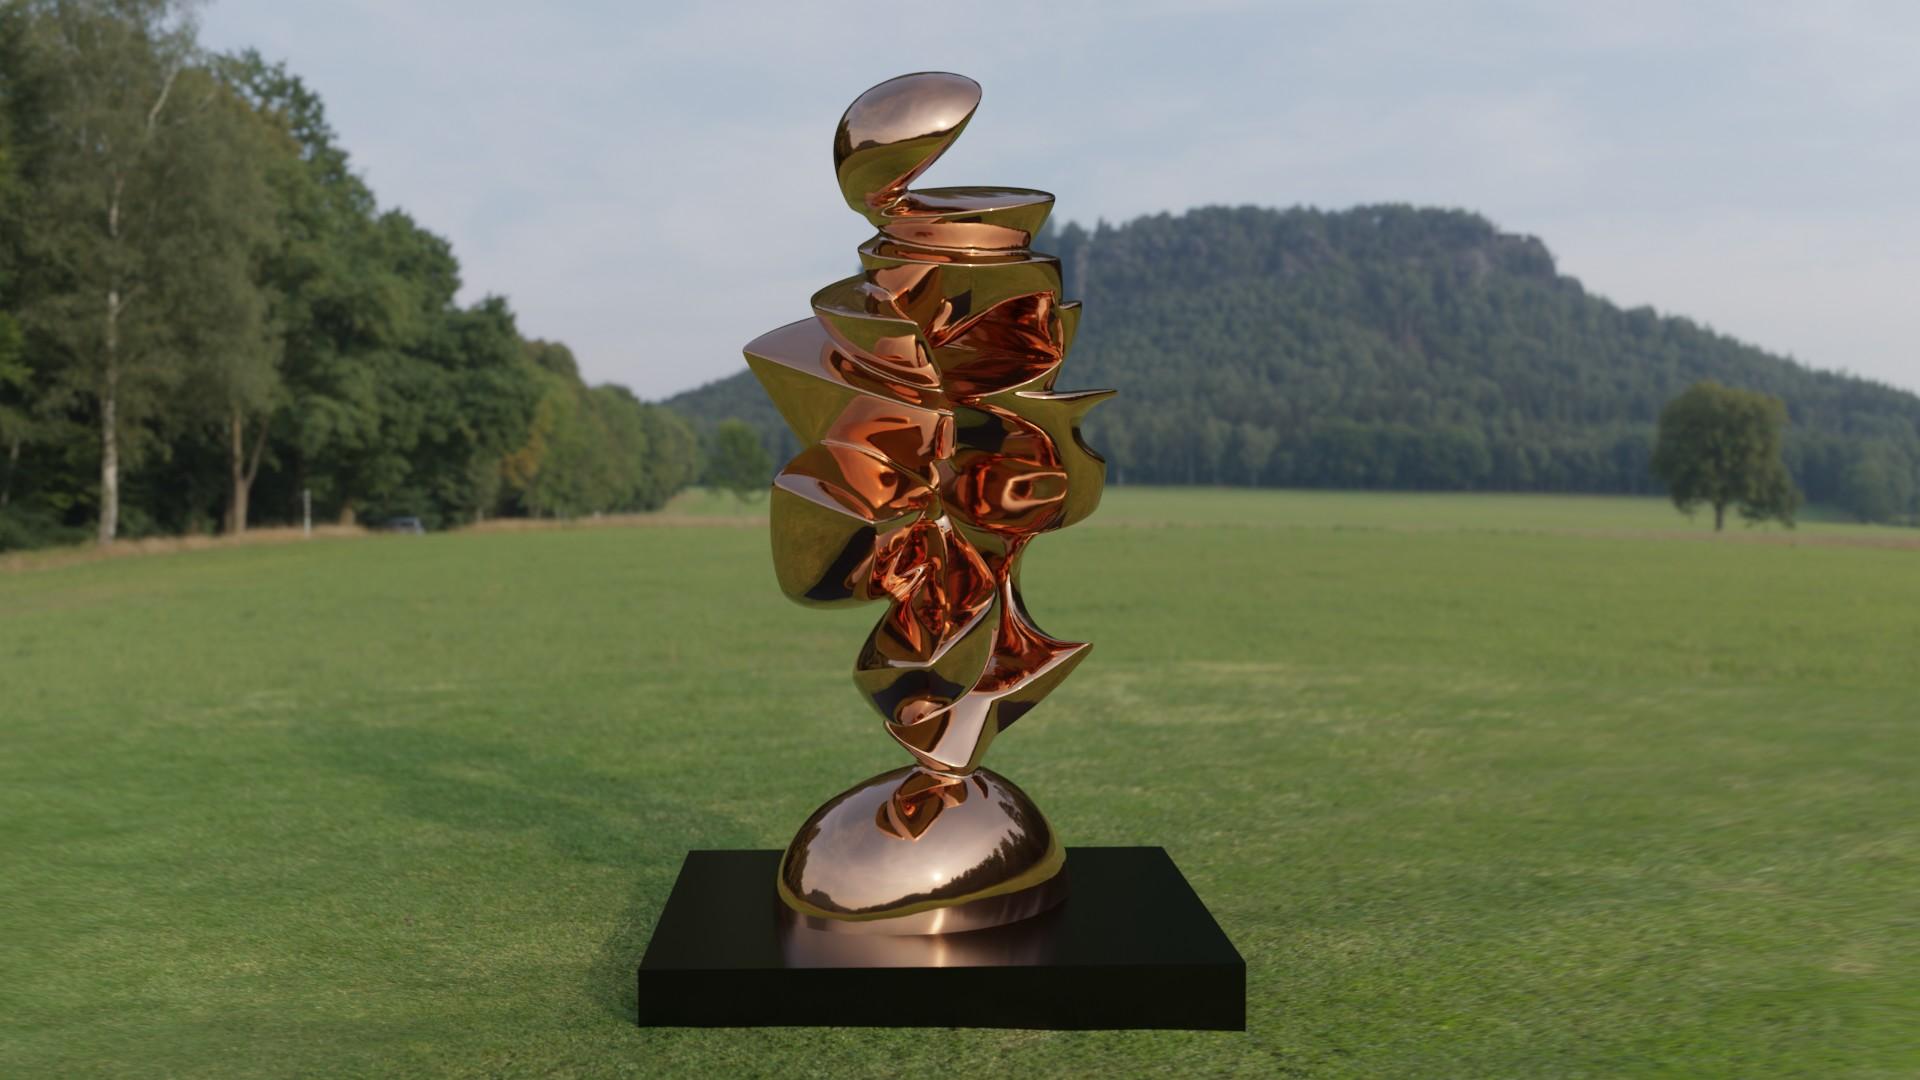 Expansion ( of the Heart ) - Sculpture by Jan Willem Krijger